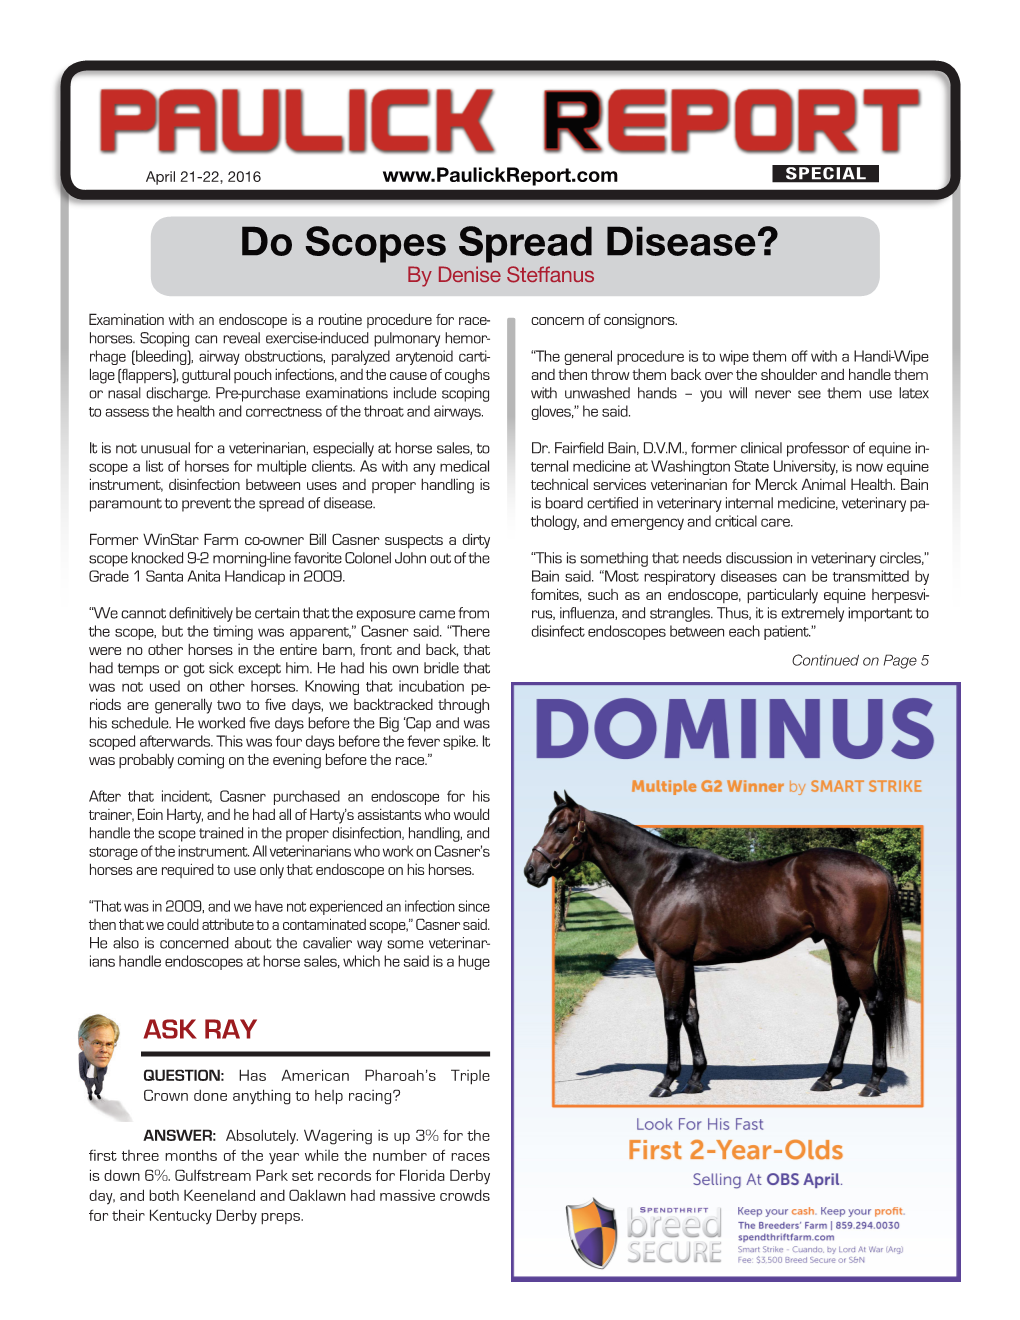 Do Scopes Spread Disease? by Denise Steffanus